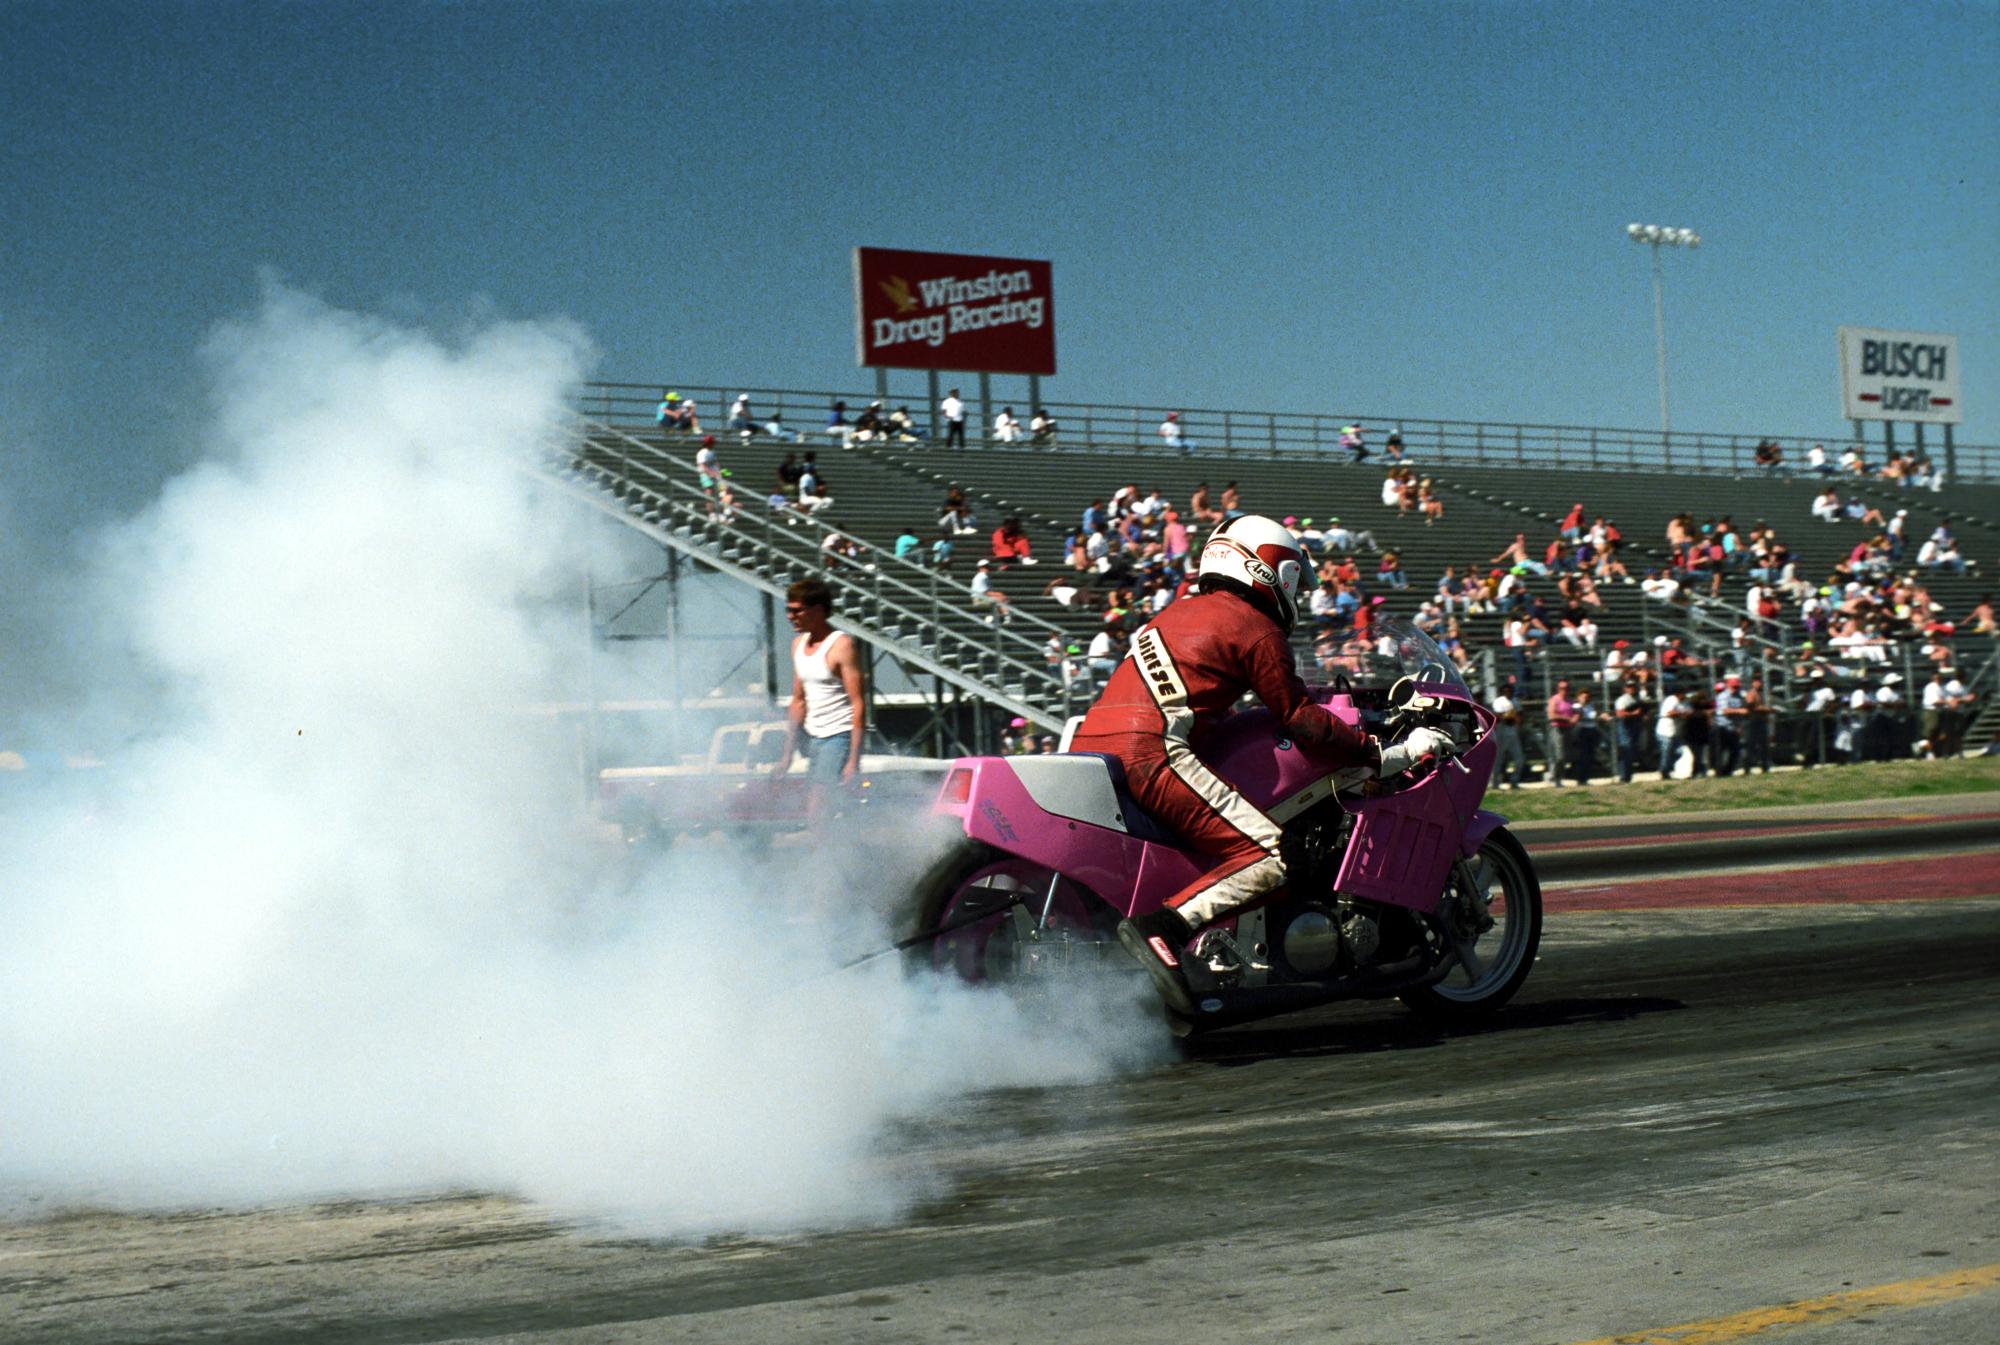 Texas Motor Drag Racing (1991) - Drag Racing Warm Up Start #5